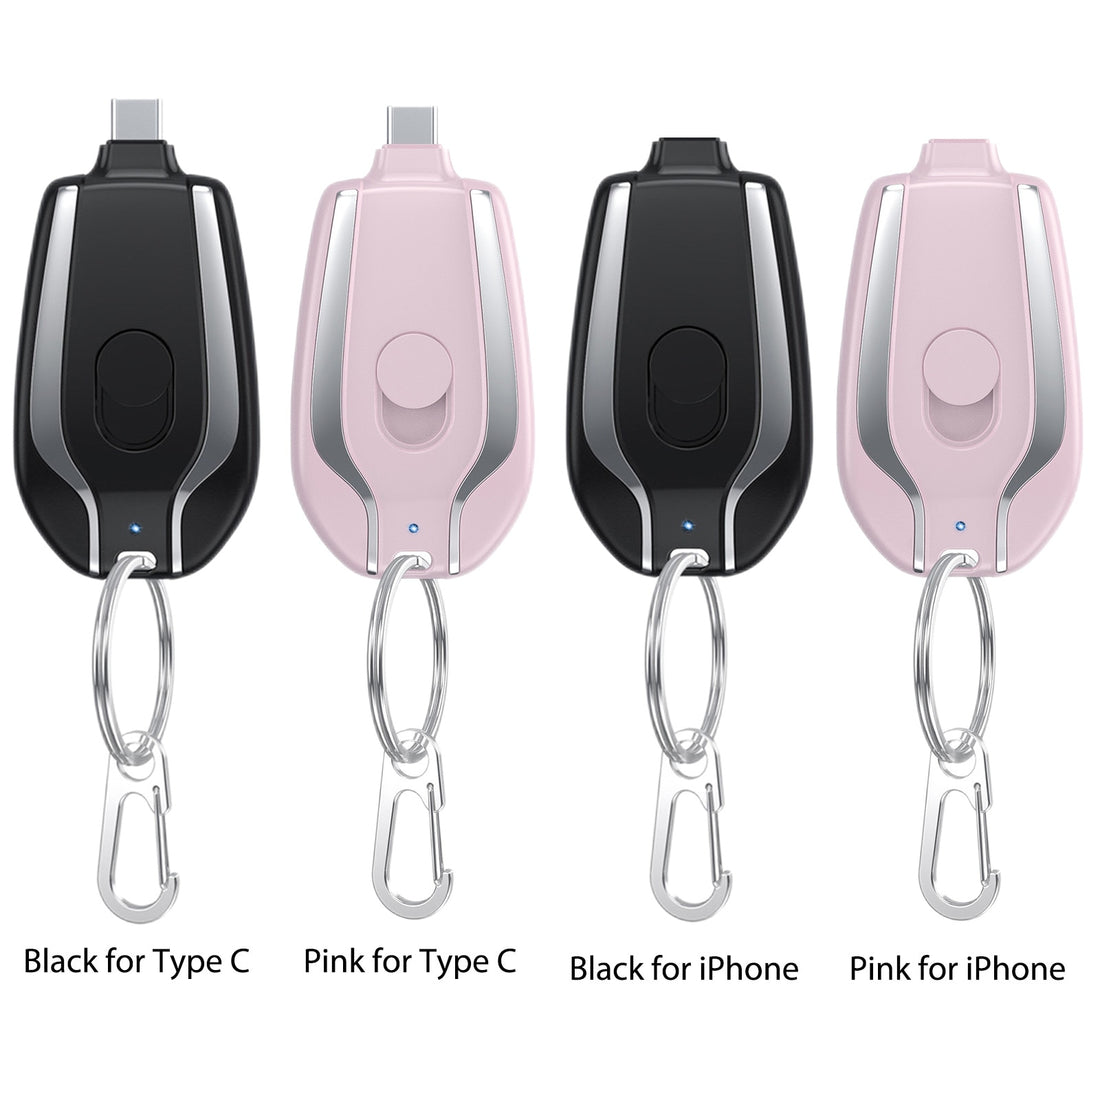 Mini Portable Keychain Phone Charger: 1500mAh Emergency Power Bank